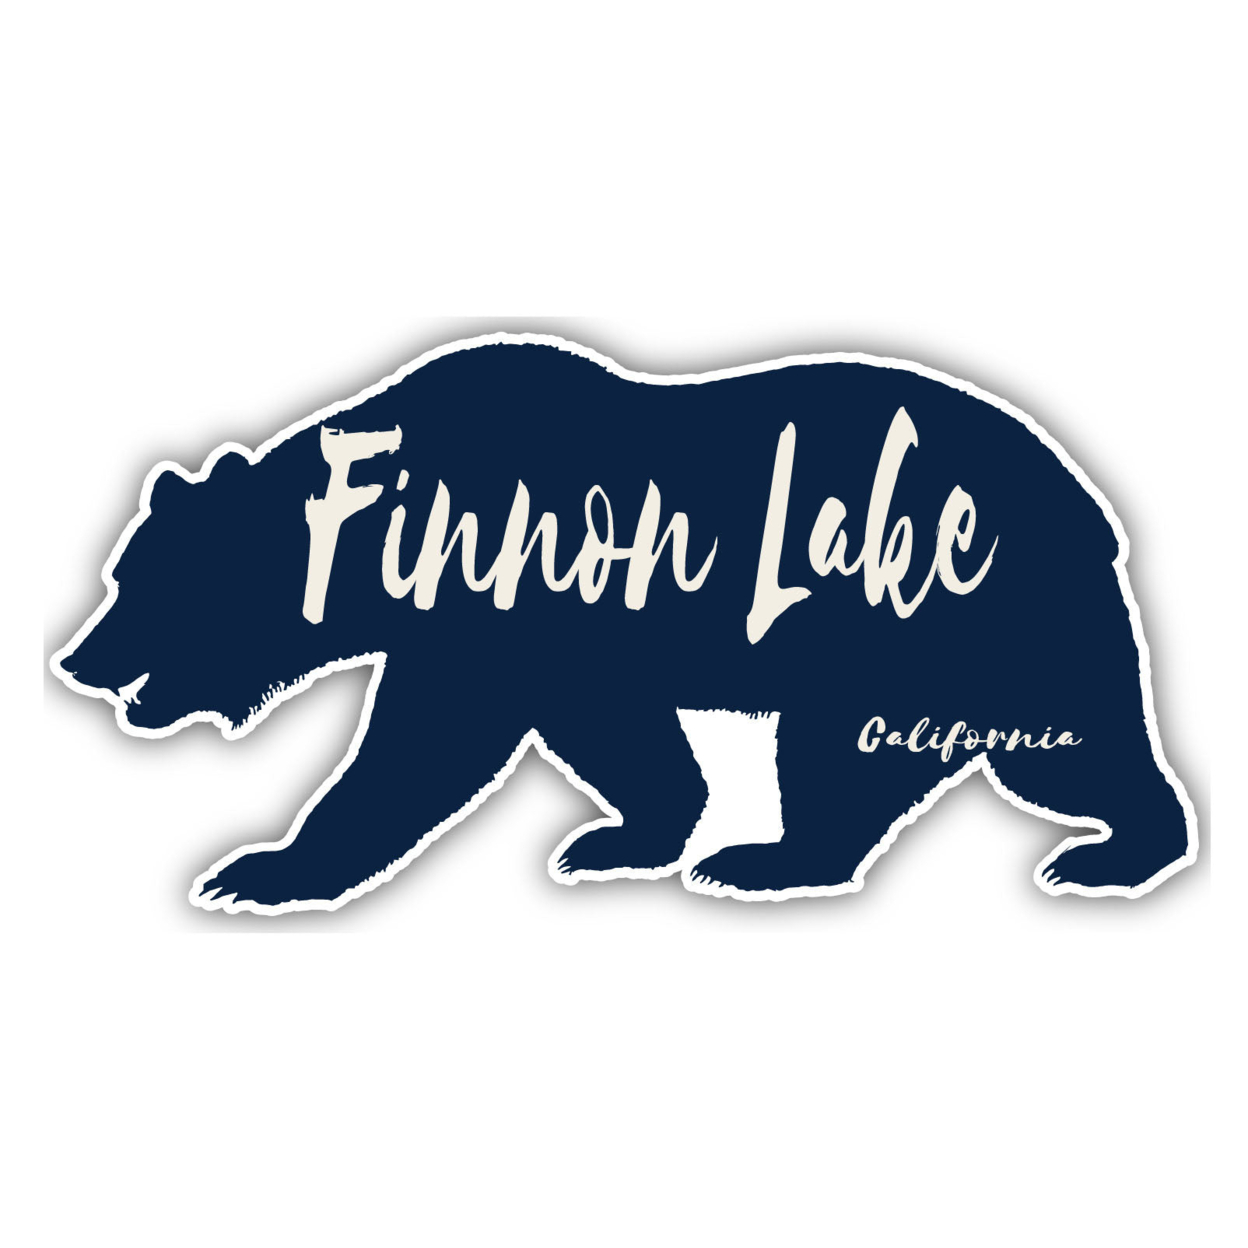 Finnon Lake California Souvenir Decorative Stickers (Choose Theme And Size) - Single Unit, 2-Inch, Camp Life